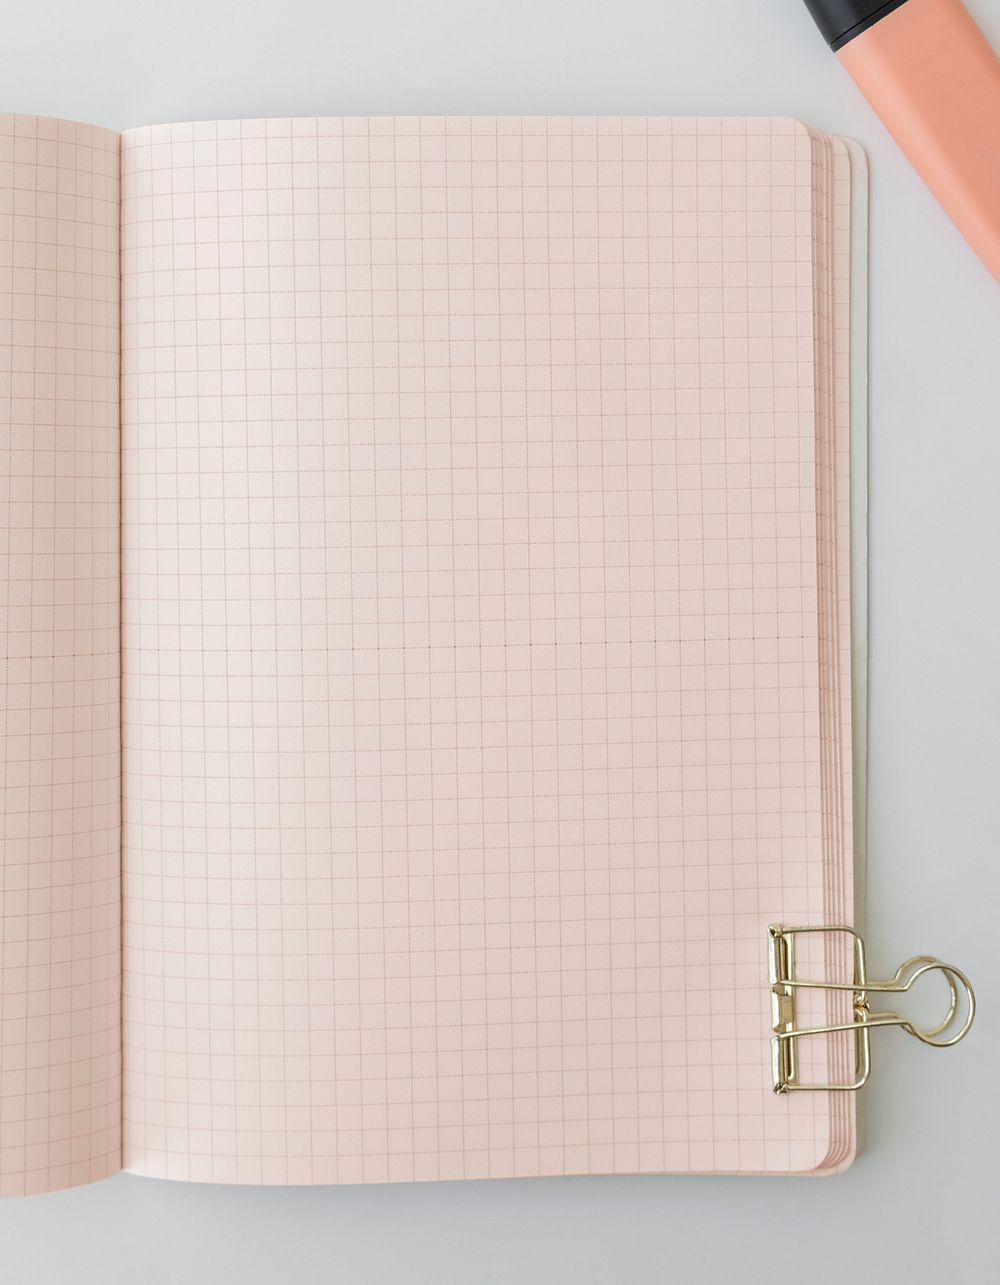 Blank white grid pattern notebook mockup